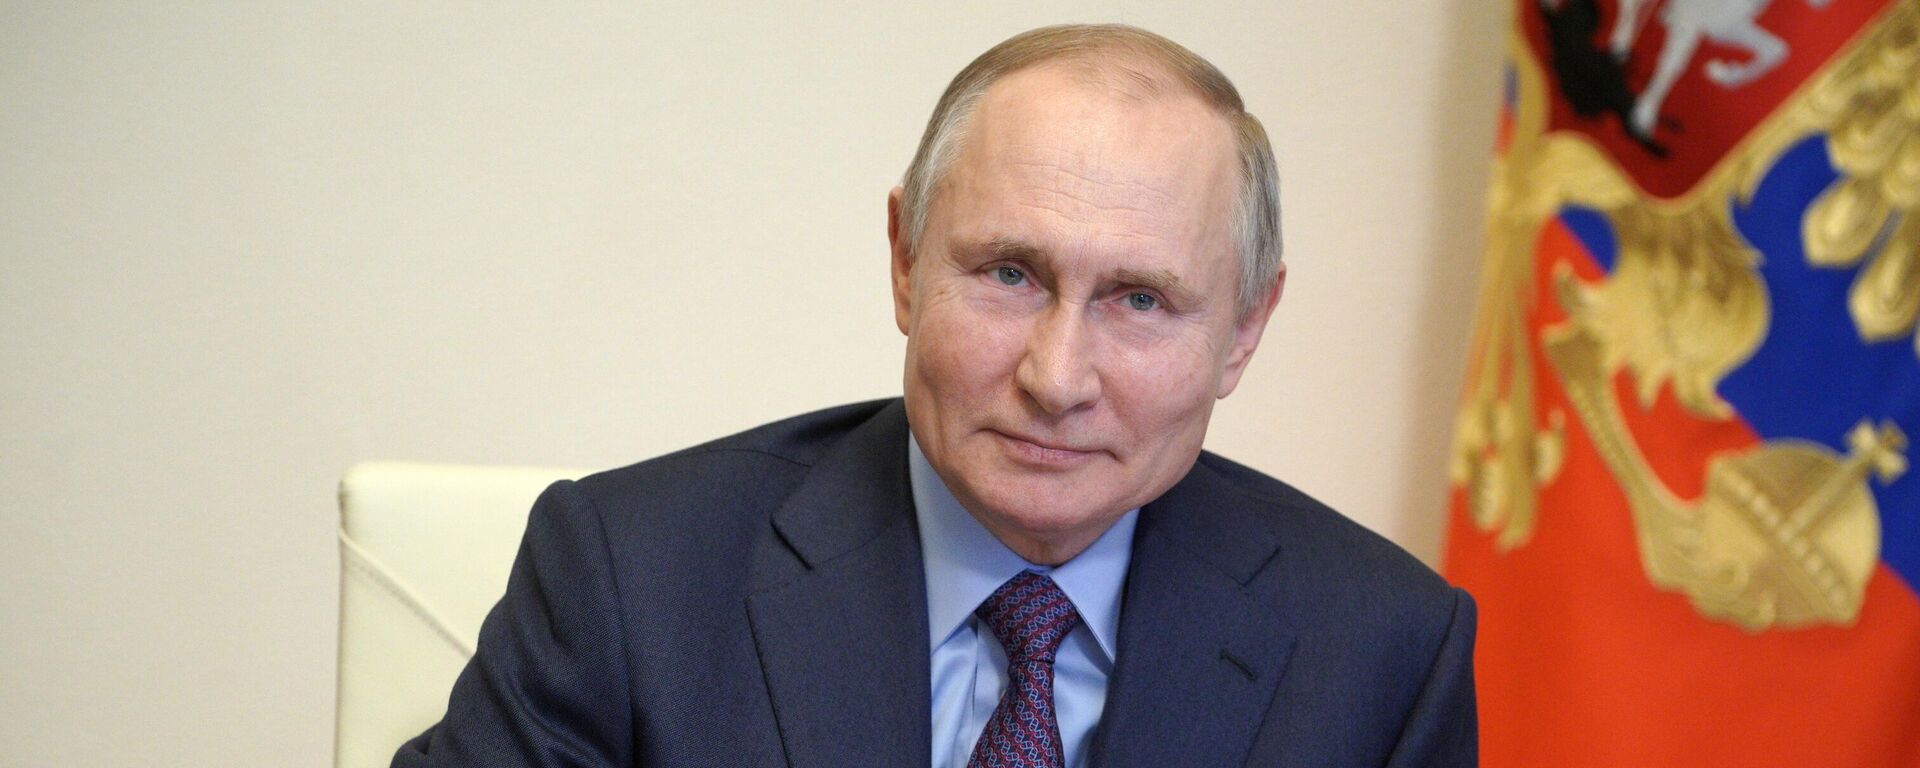 Vladímir Putin, presidente de Rusia - Sputnik Mundo, 1920, 25.03.2021